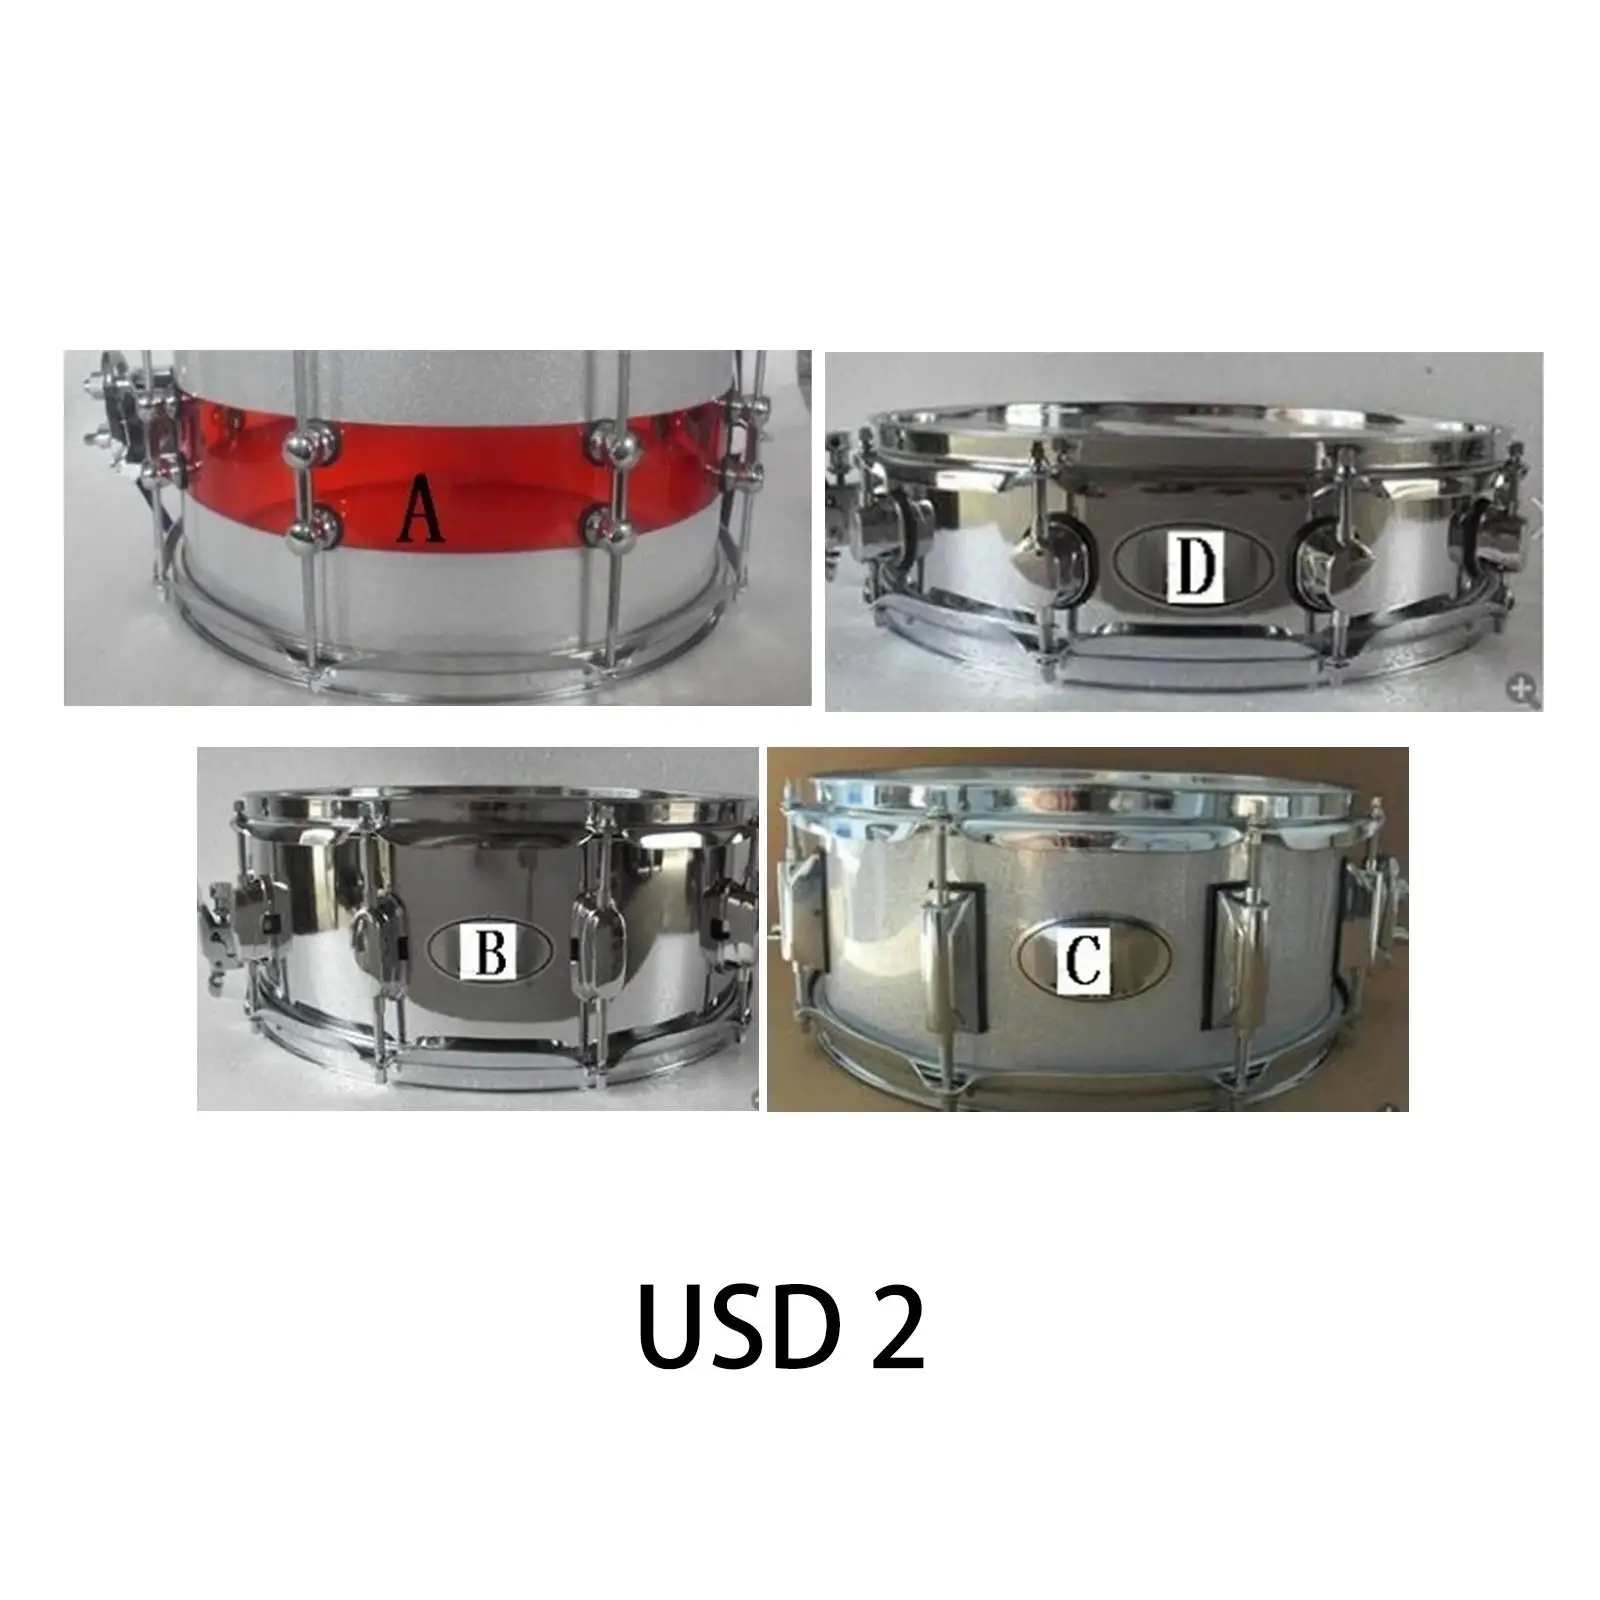 Aluminum Alloy Double End Drum Lugs Snare Drum Lug Two Side Drum Lug Drum Replacement Parts Percussion Instruments Part